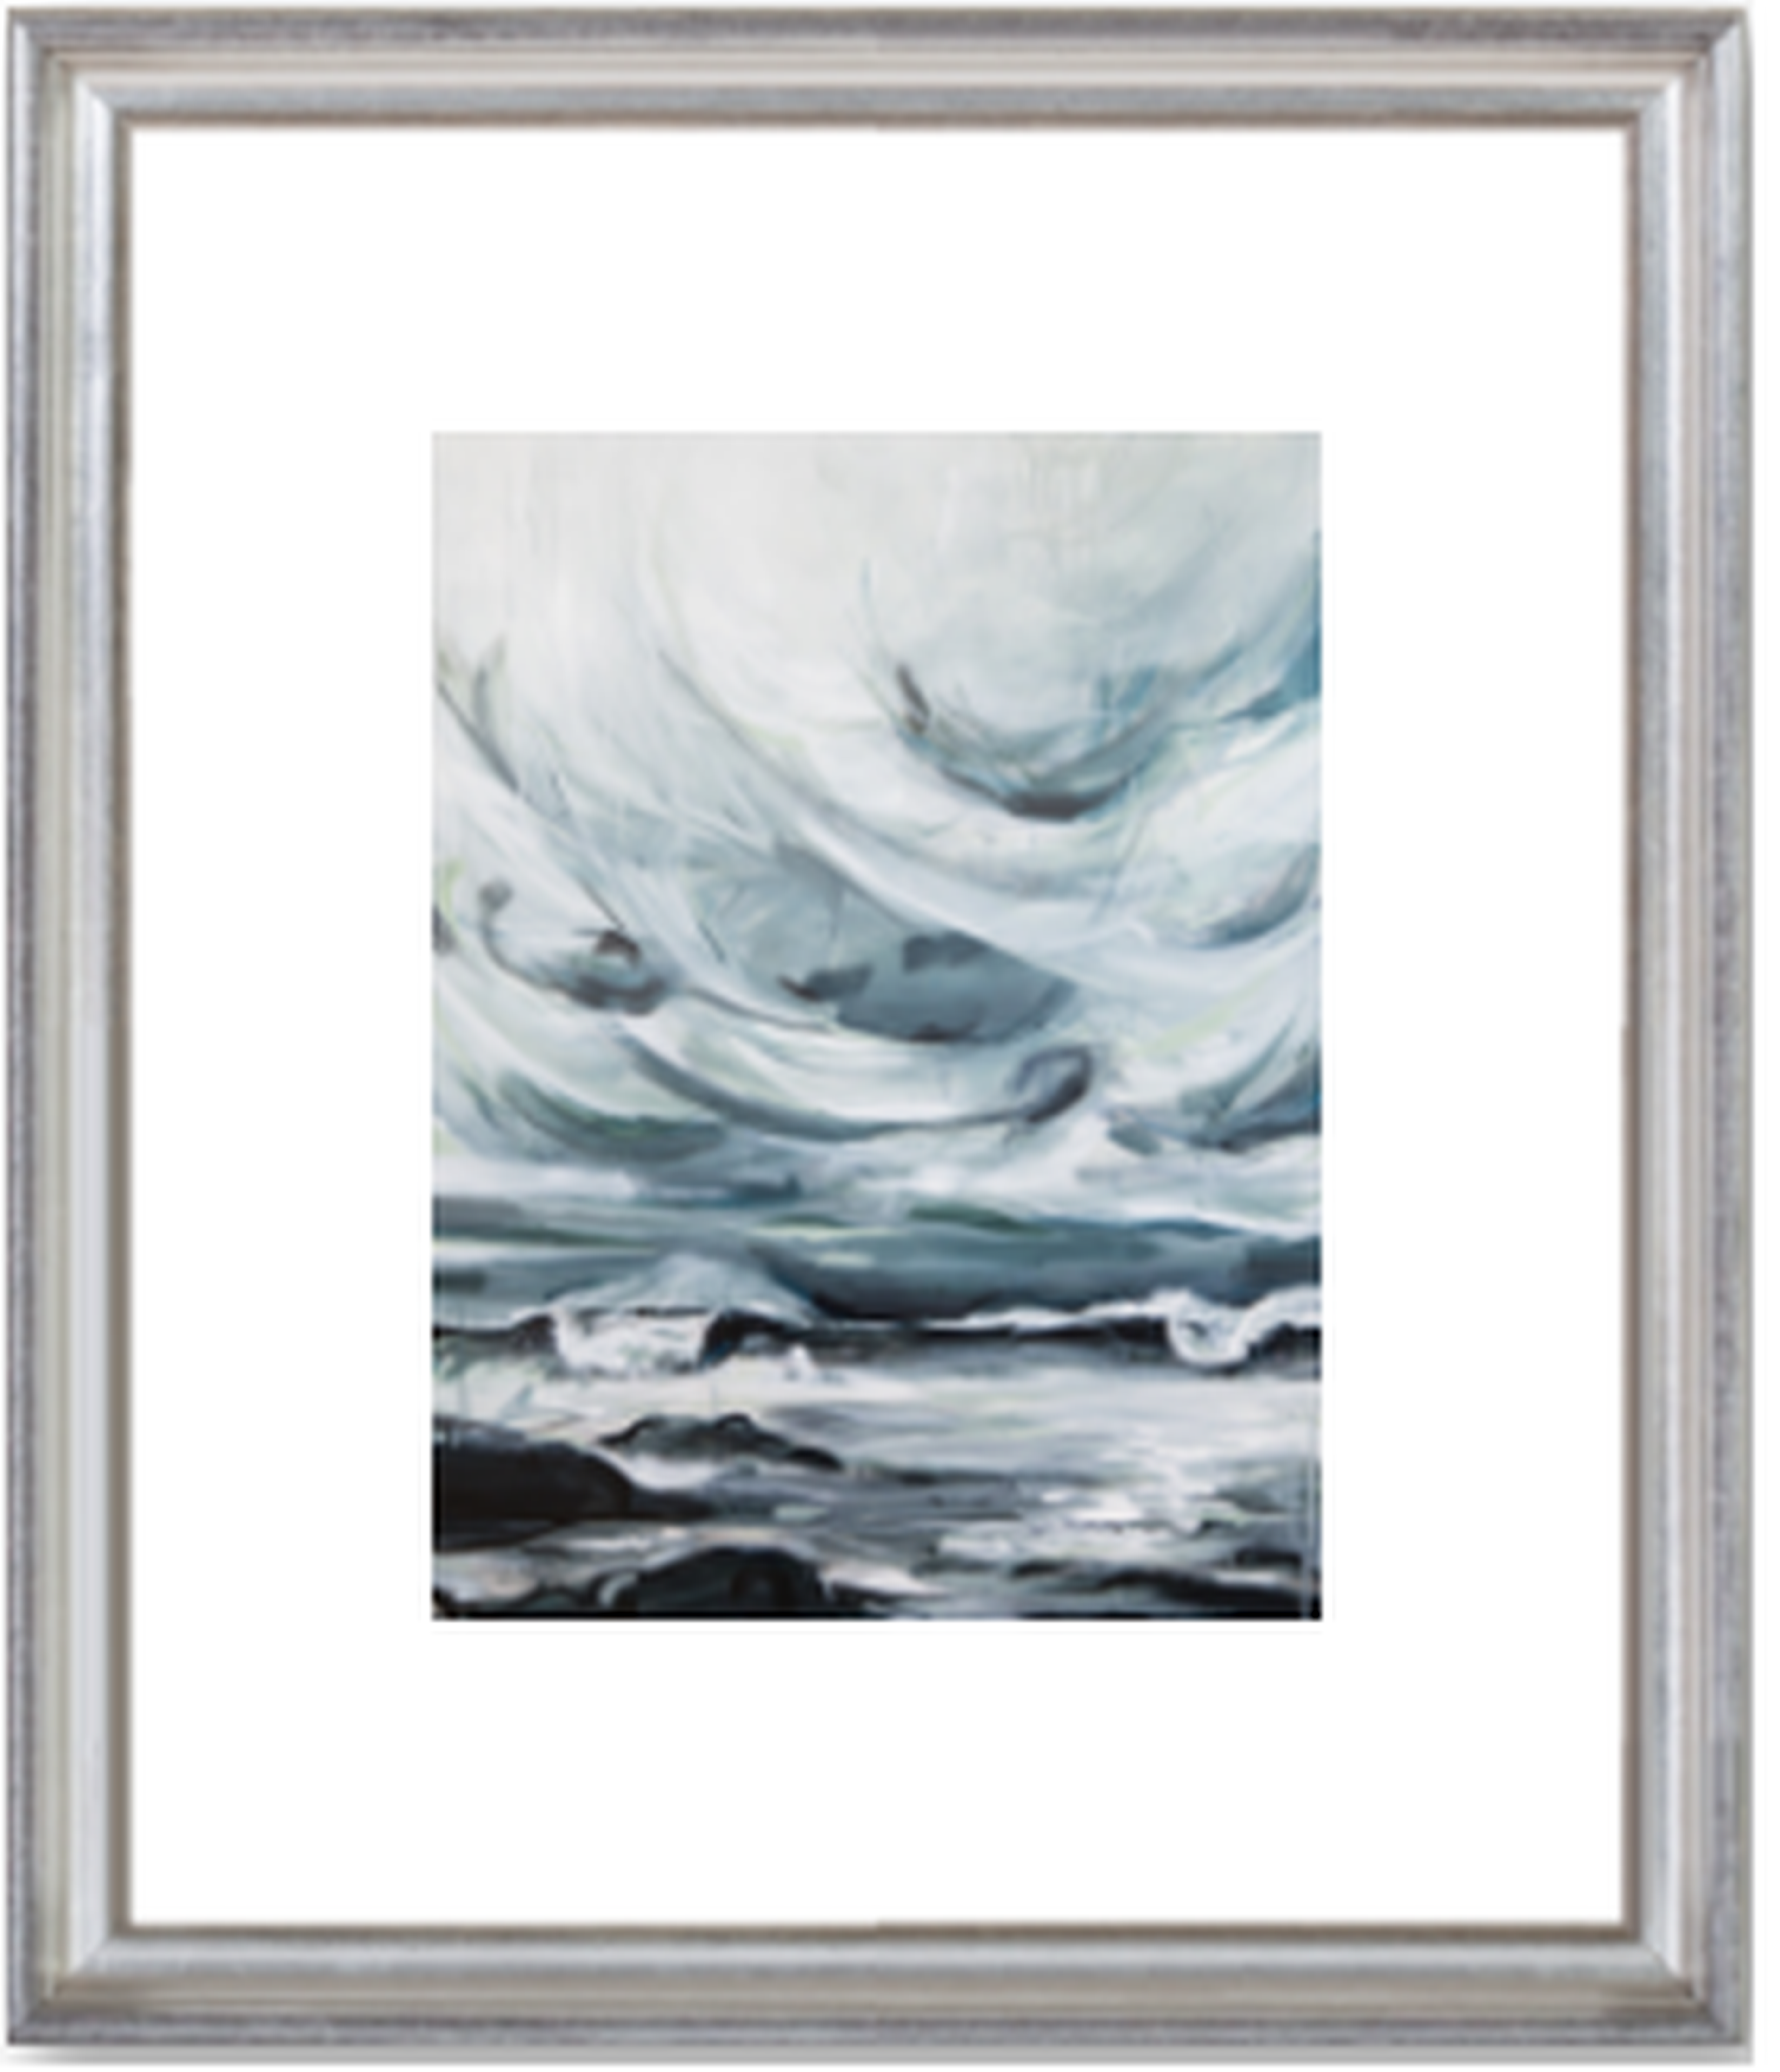 Stormy Skies - 16" x 20" - Silver Leaf Frame with Mat - Artfully Walls